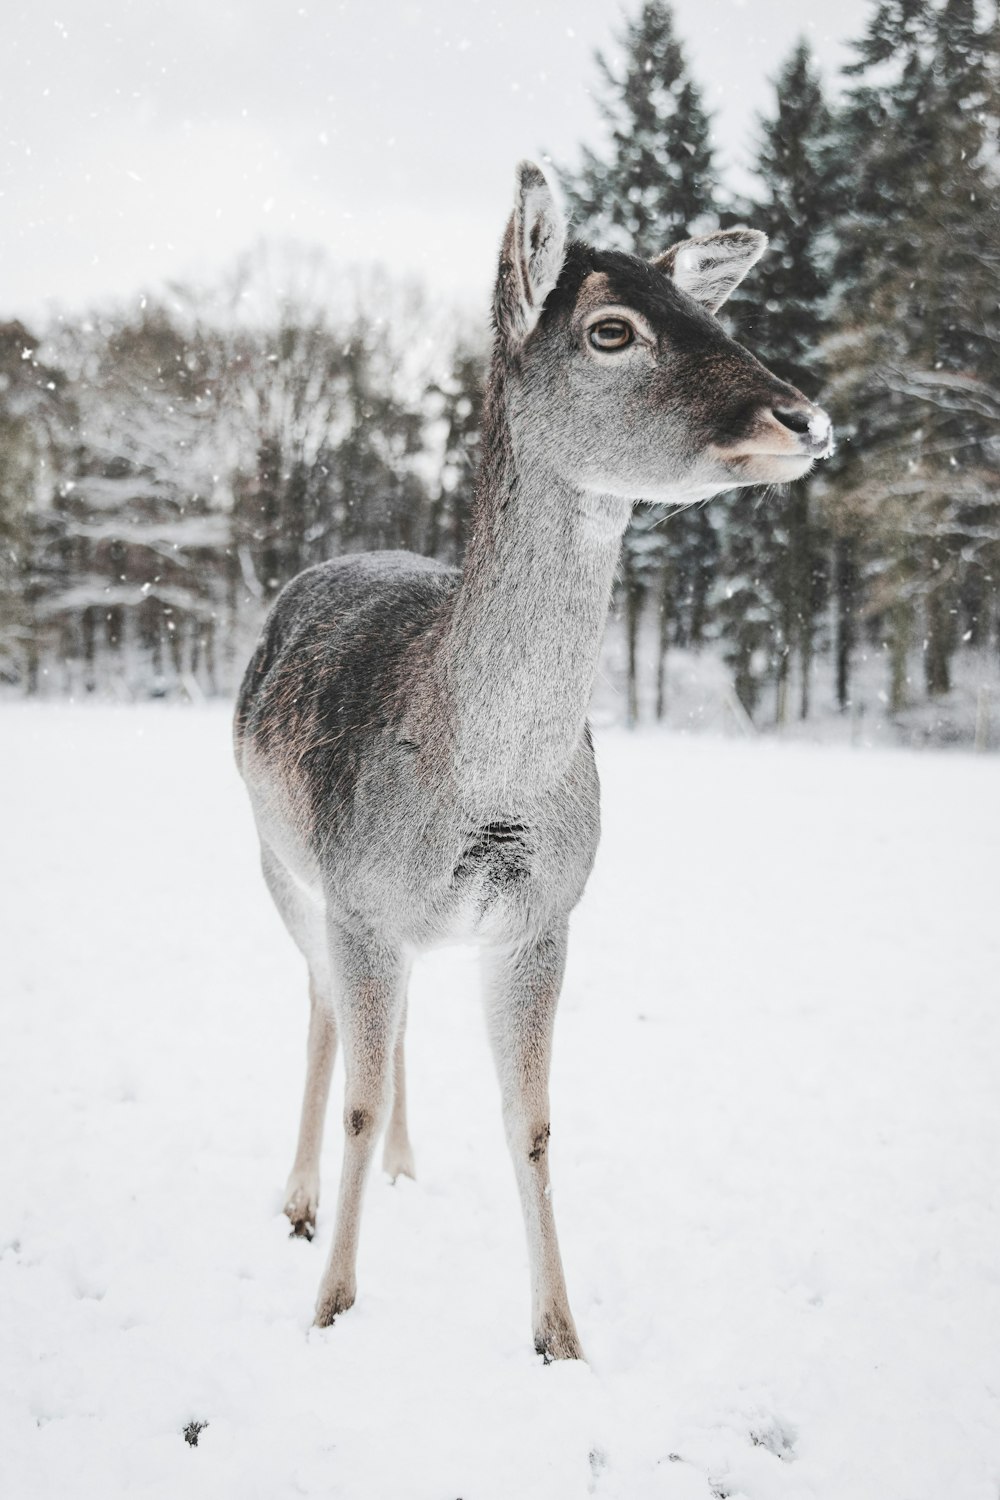 deer standing on snow-coated ground